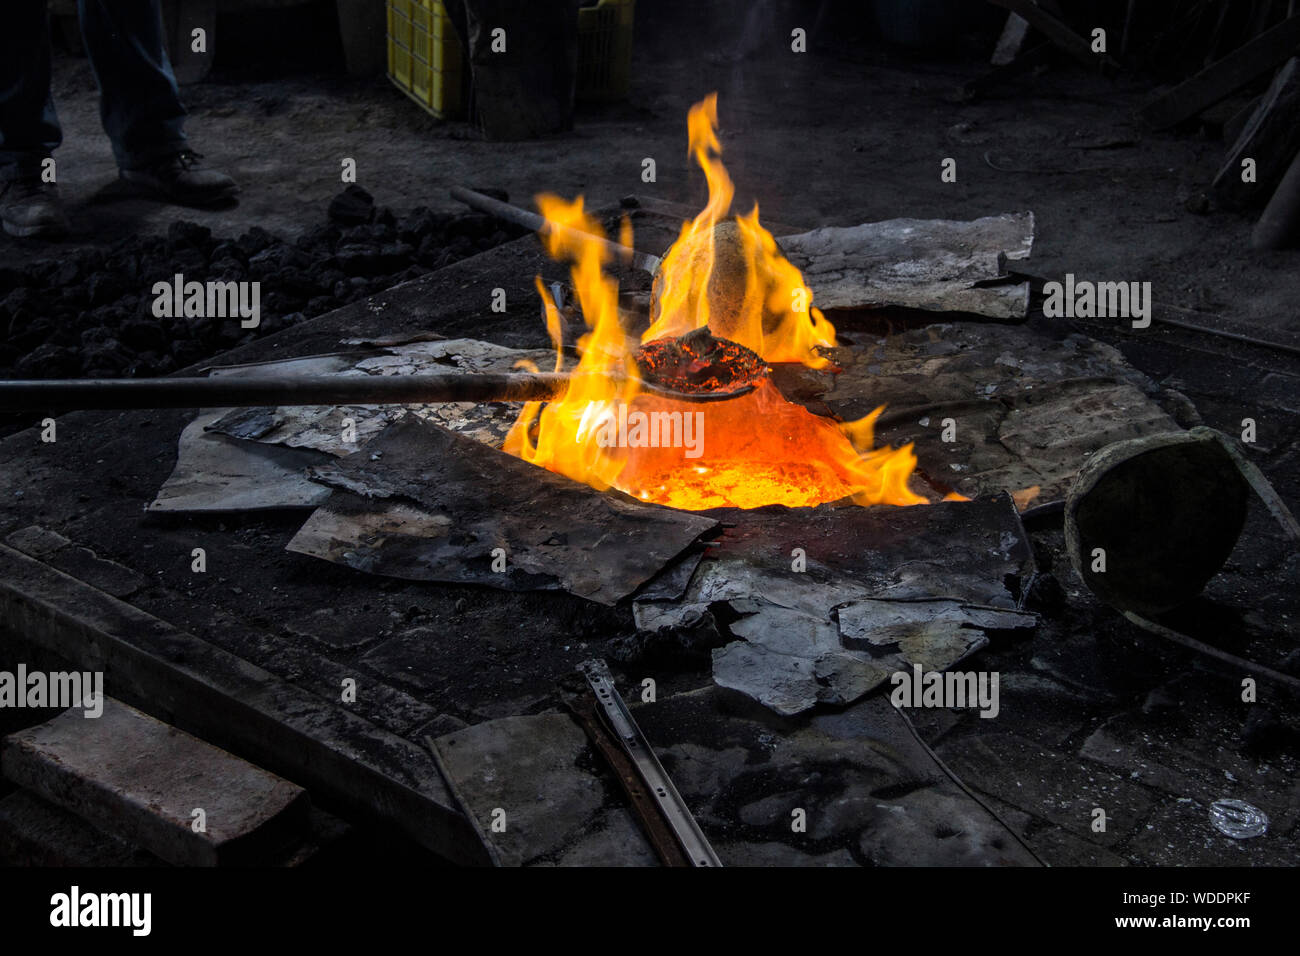 Iron Rod In Burning Fire Stock Photo